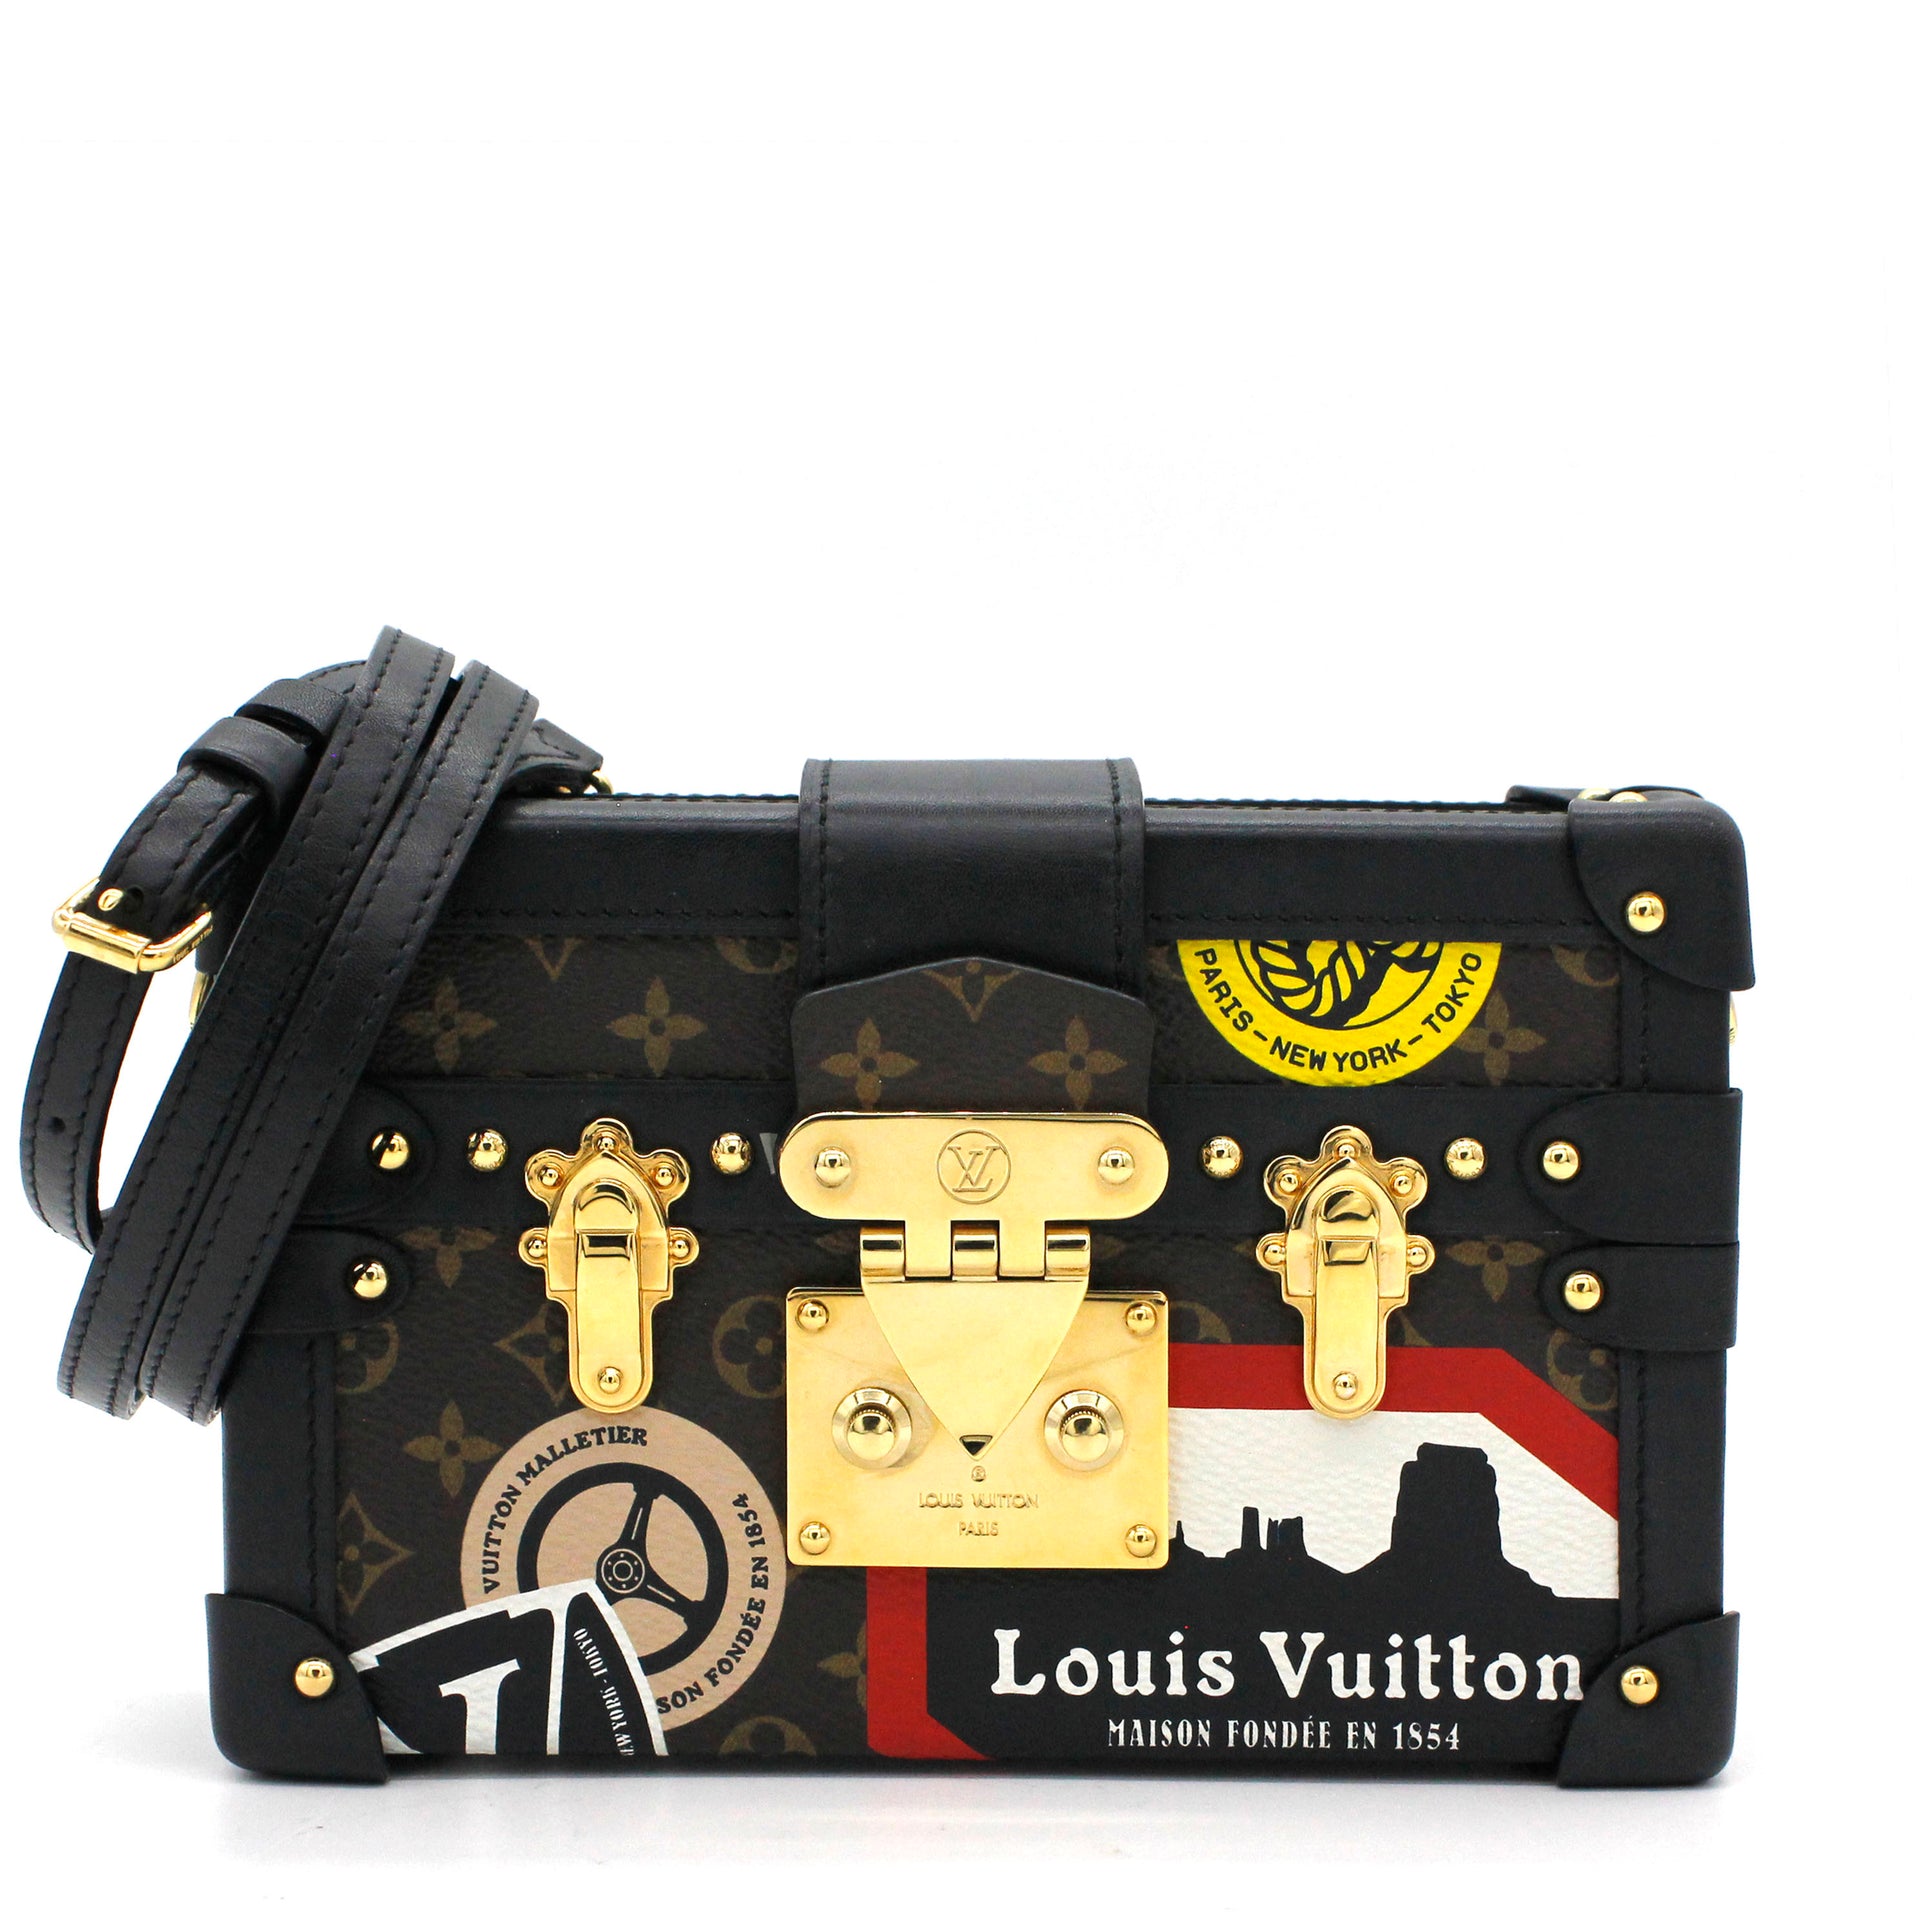 Louis Vuitton Limited Edition Petite Malle Bag